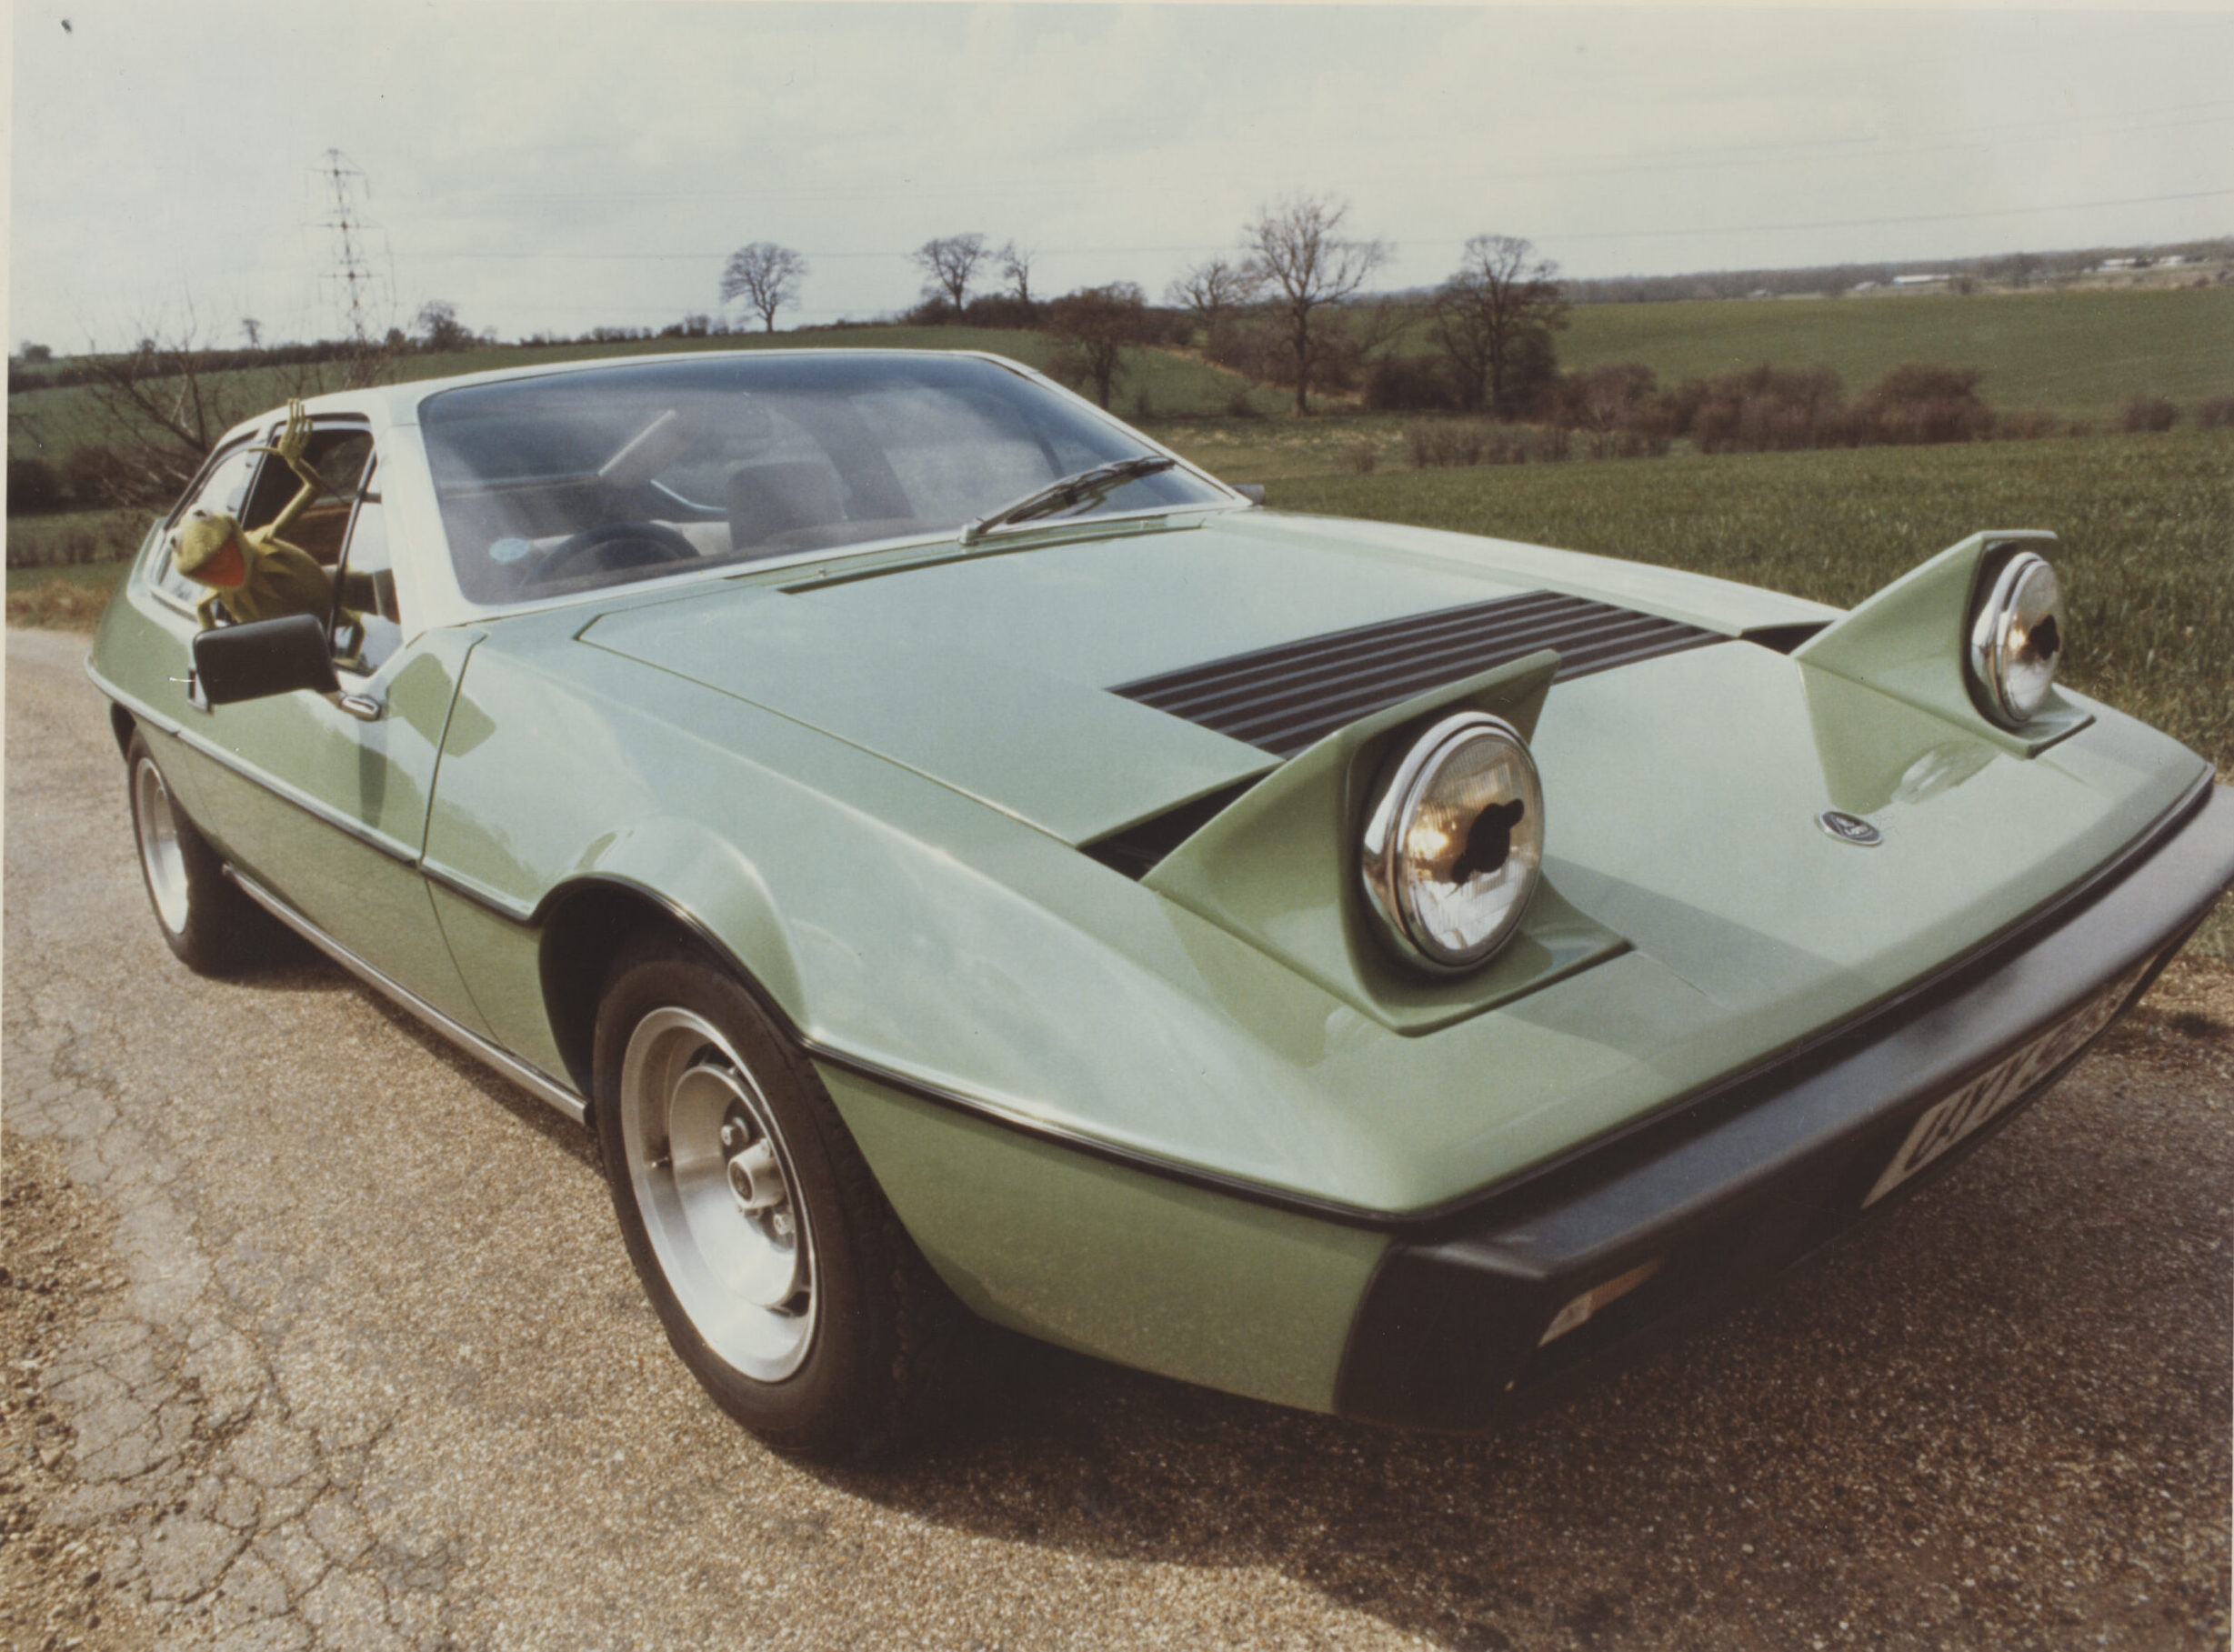 Kermit the Car: Jim Henson’s beloved green Lotus